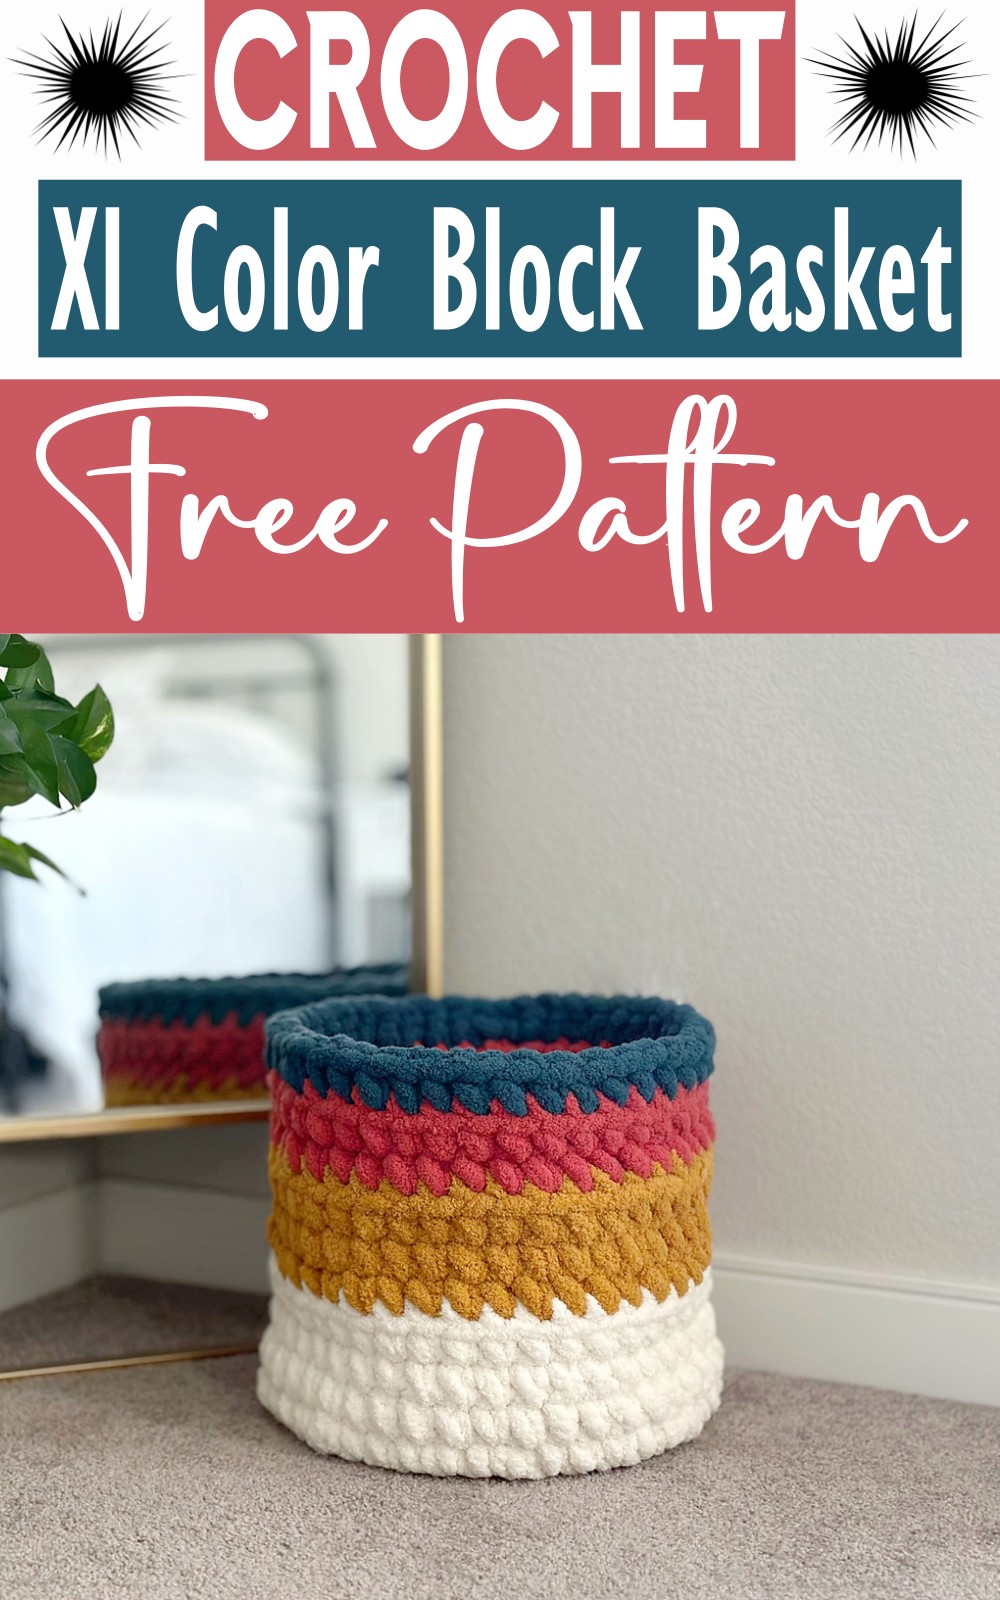 Xl Crochet Color Block Basket